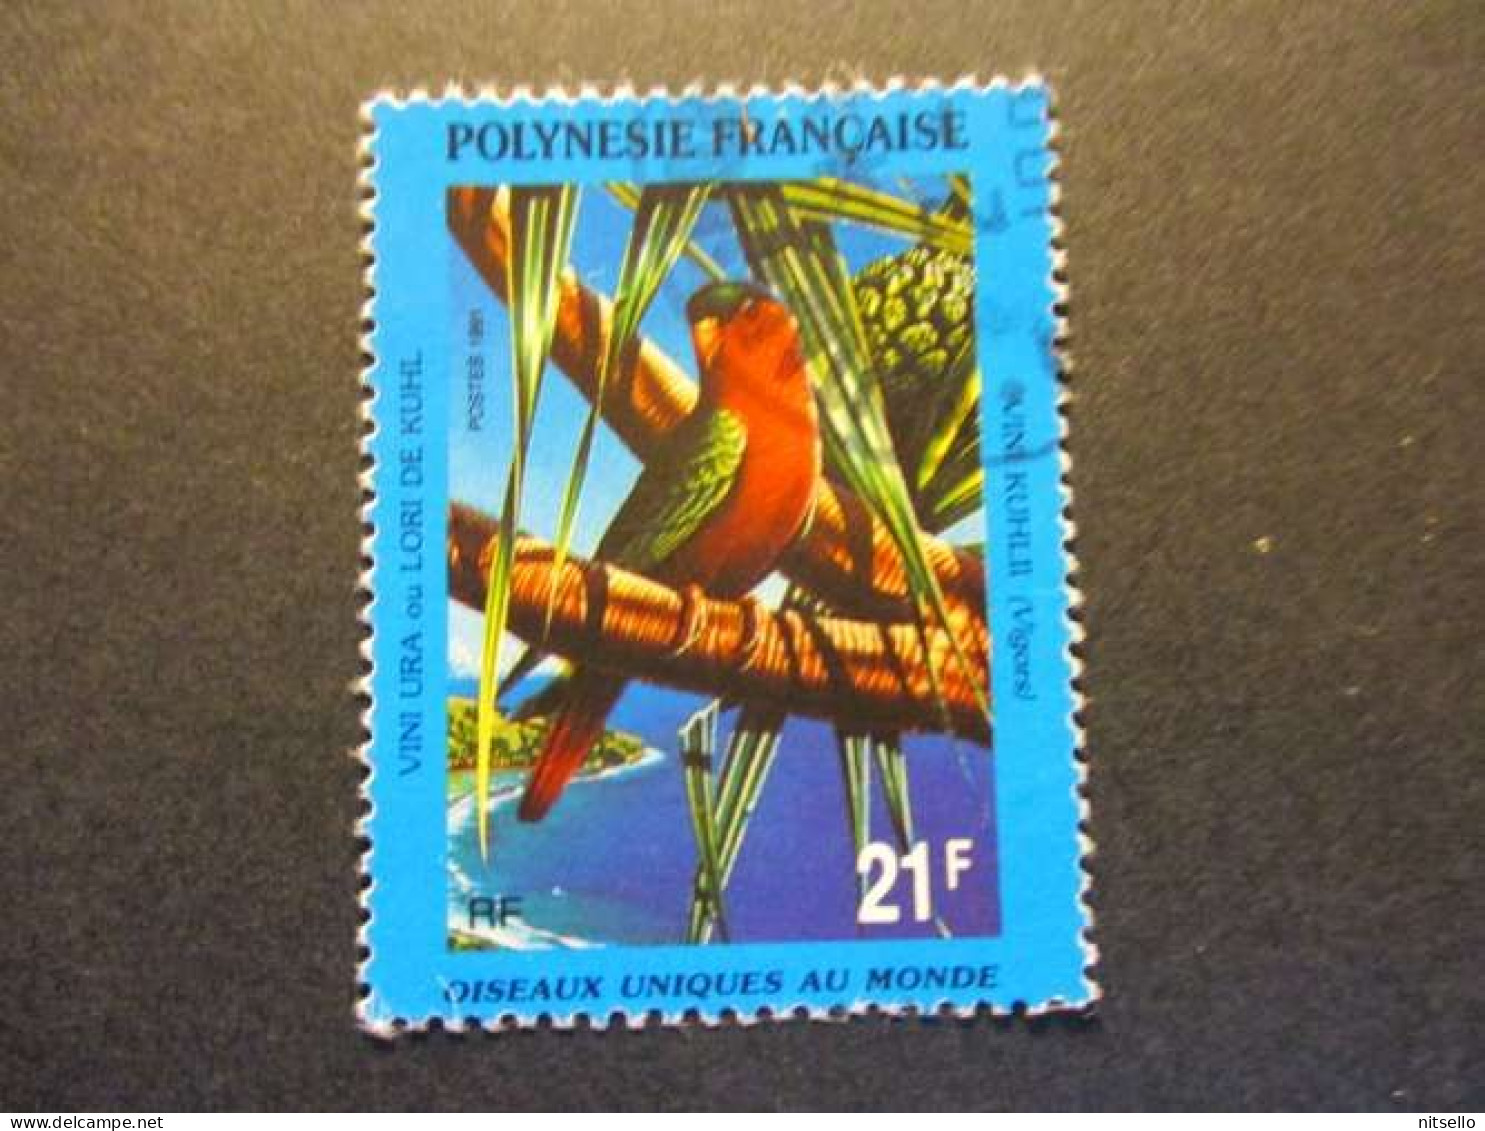 LOTE 2202B ///  (C015)  POLINESIA FRANCESA  - YVERT Nº: 384 OBL 1991  ¡¡¡ OFERTA - LIQUIDATION - JE LIQUIDE !!! - Used Stamps